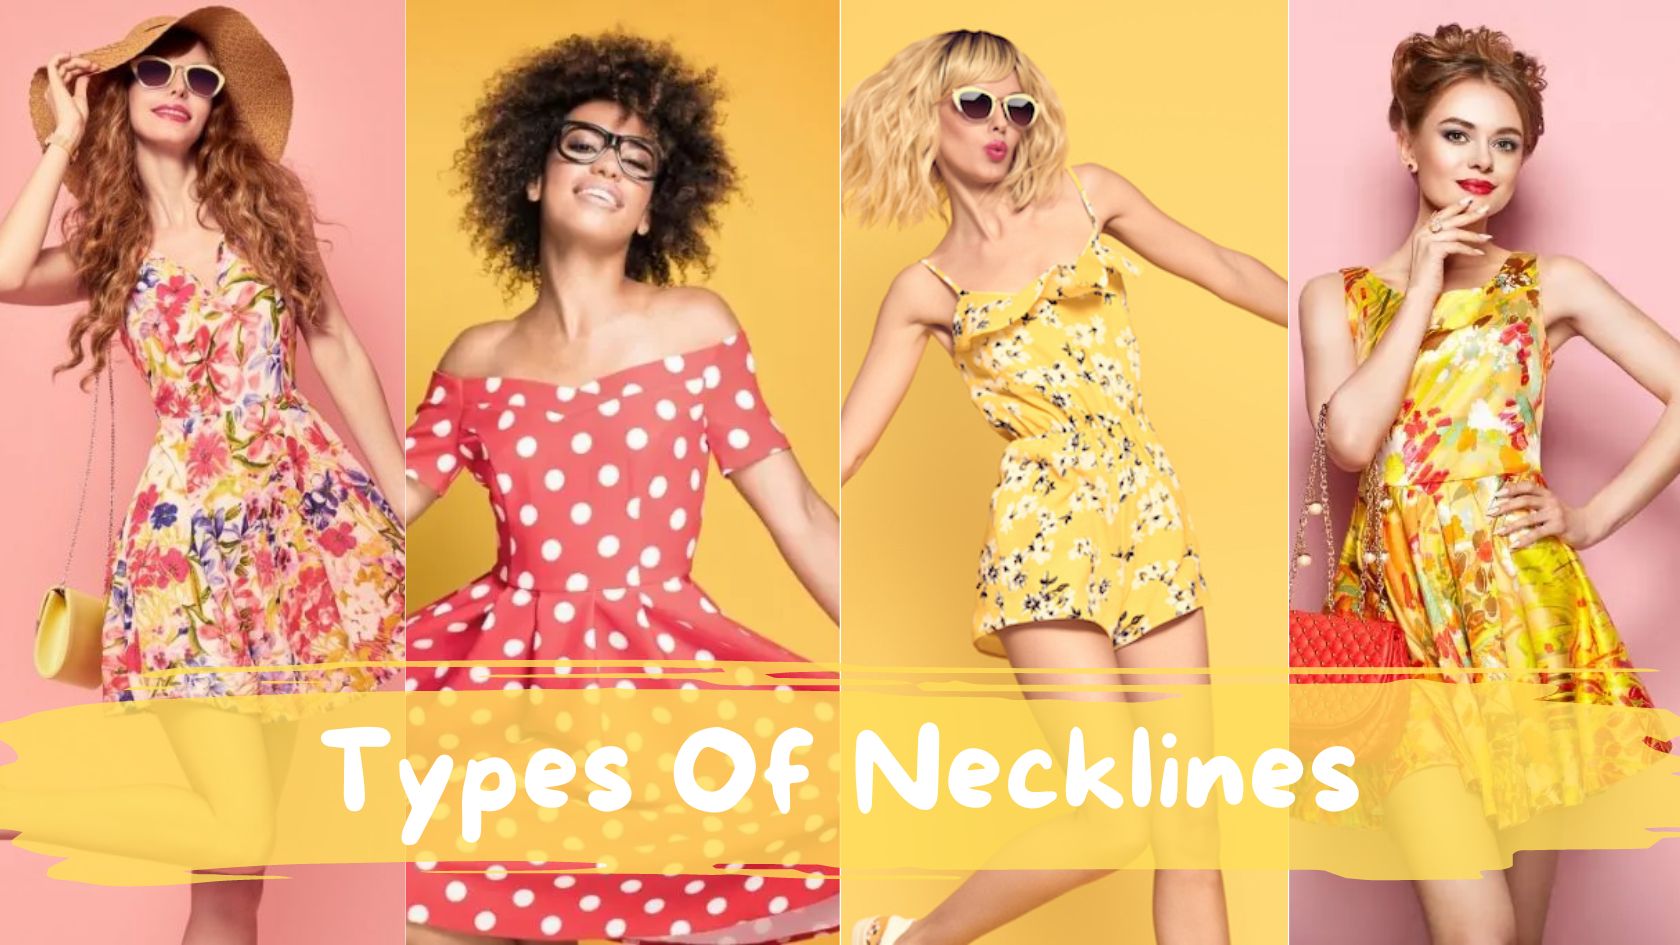 Types of Necklines